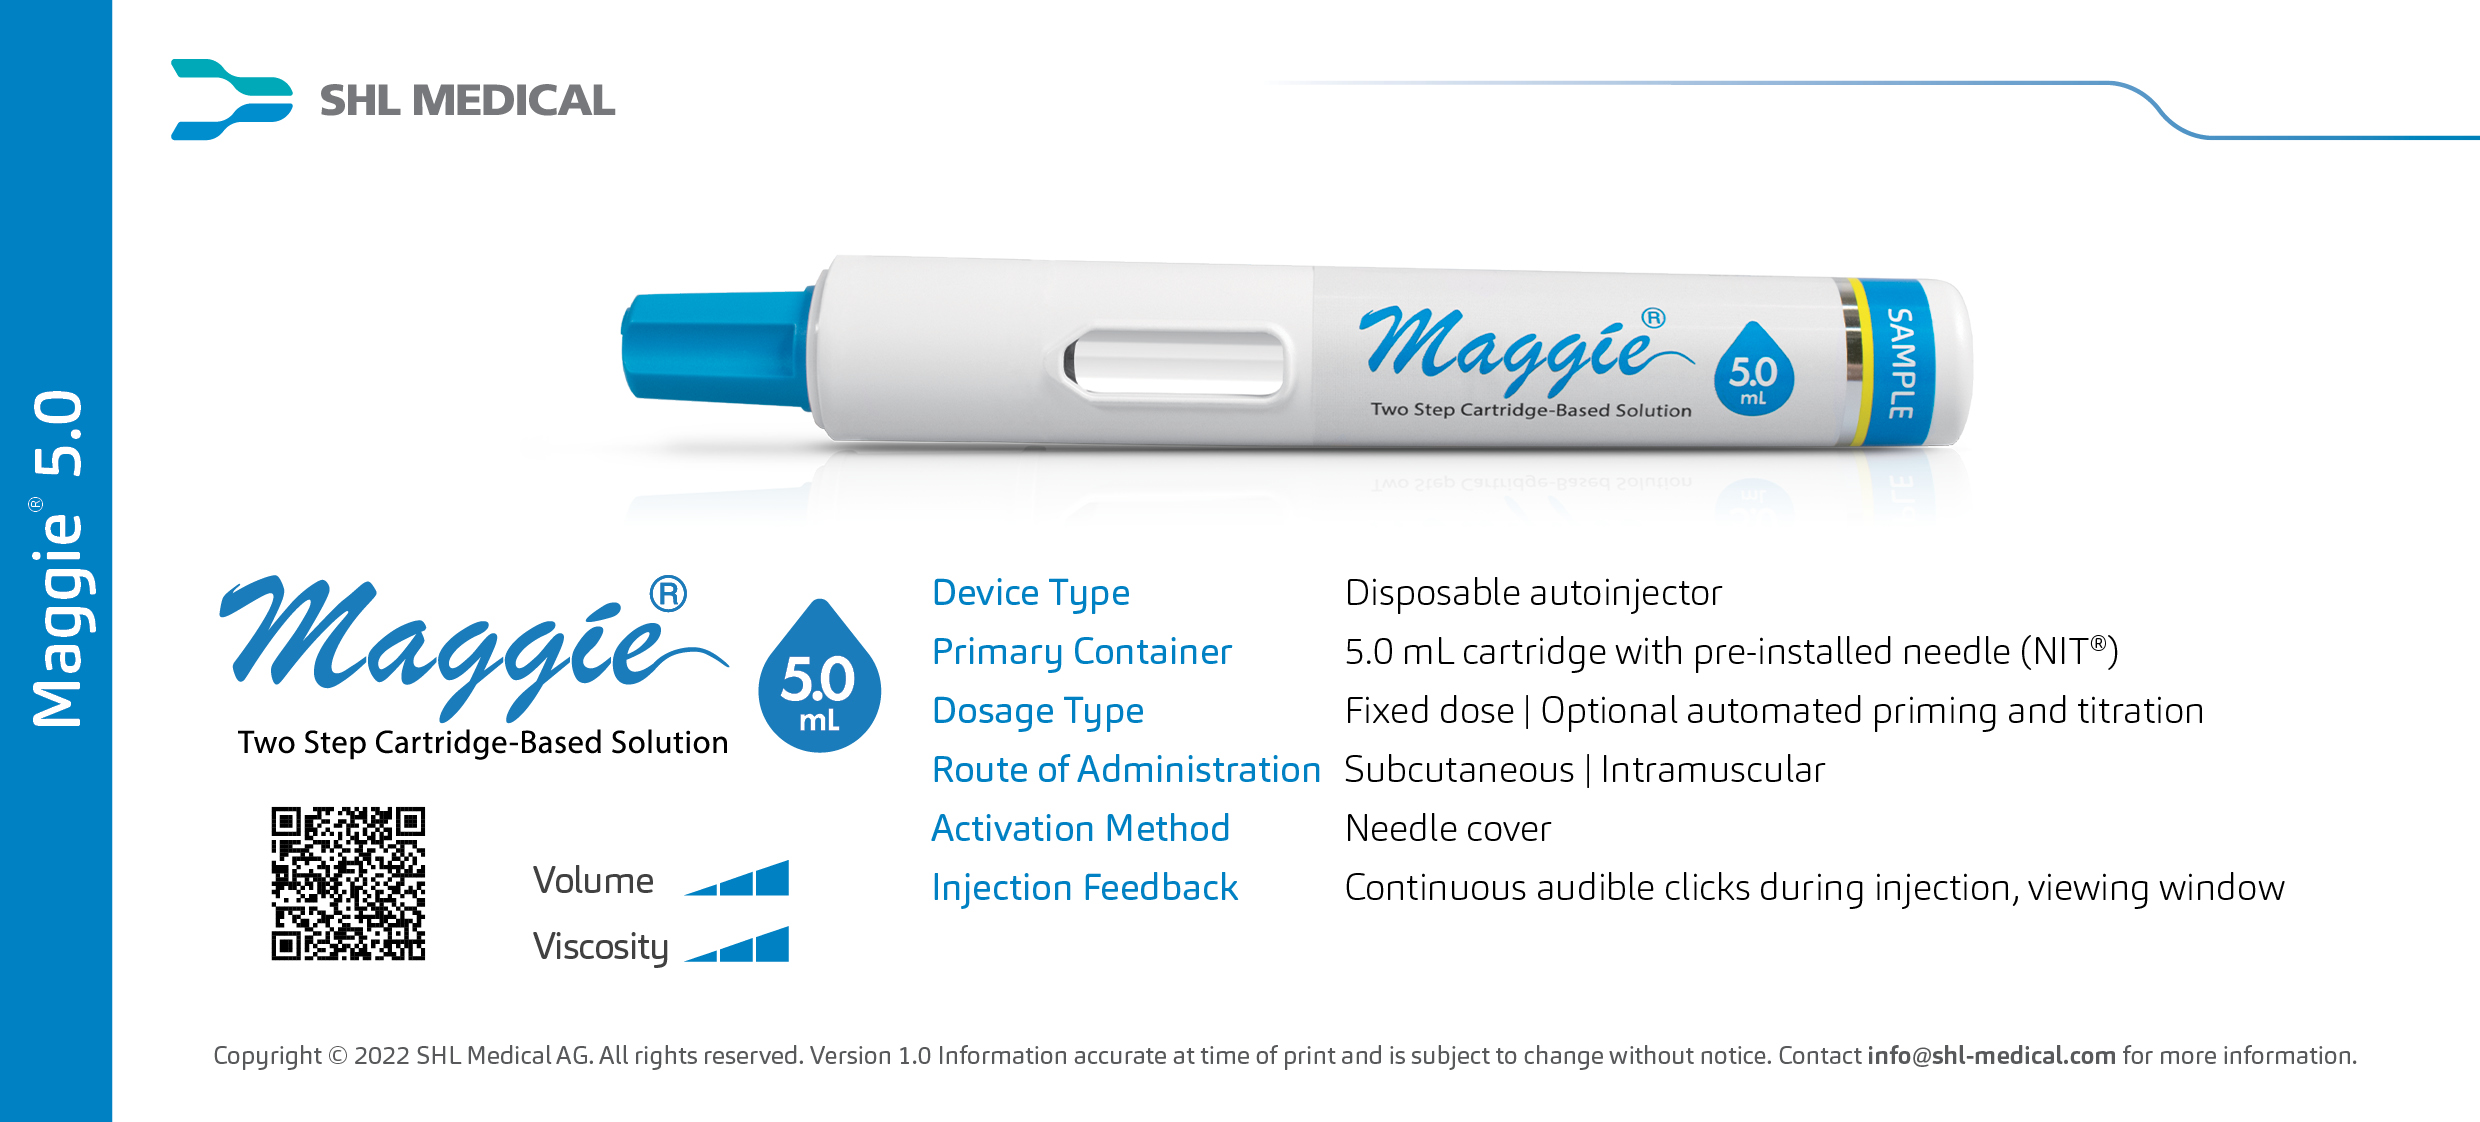 Maggie 5 Ml Cartridge Autoinjector With Needle Isolation Technology Datasheet 2023